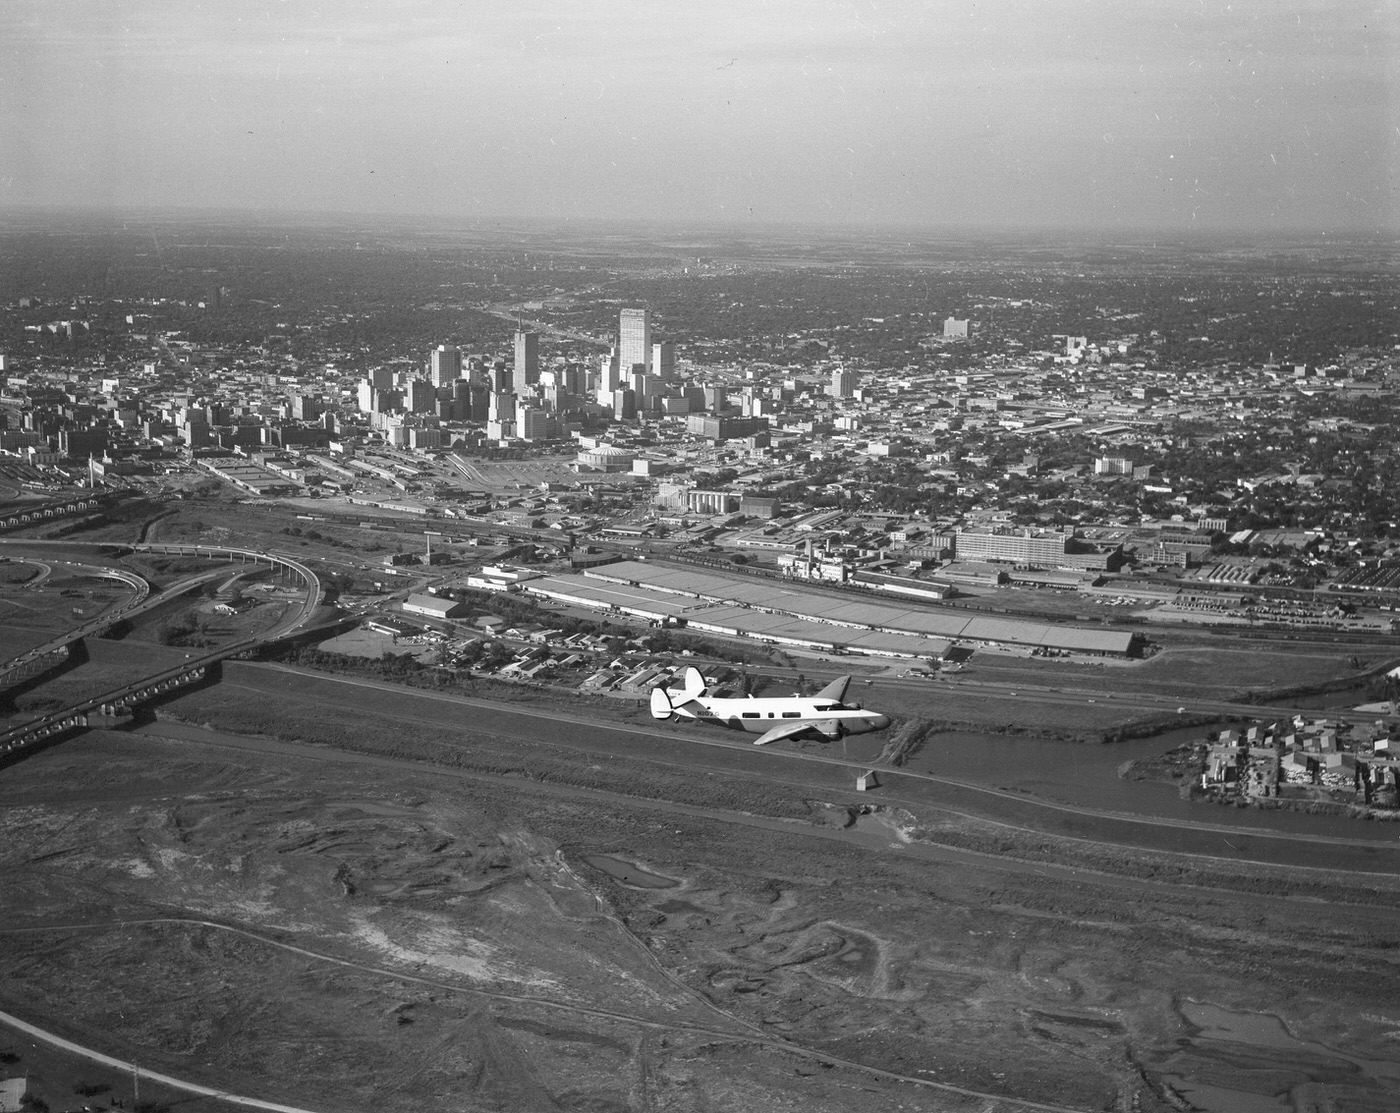 Executive Aircraft, Love Field, Dallas, 1960